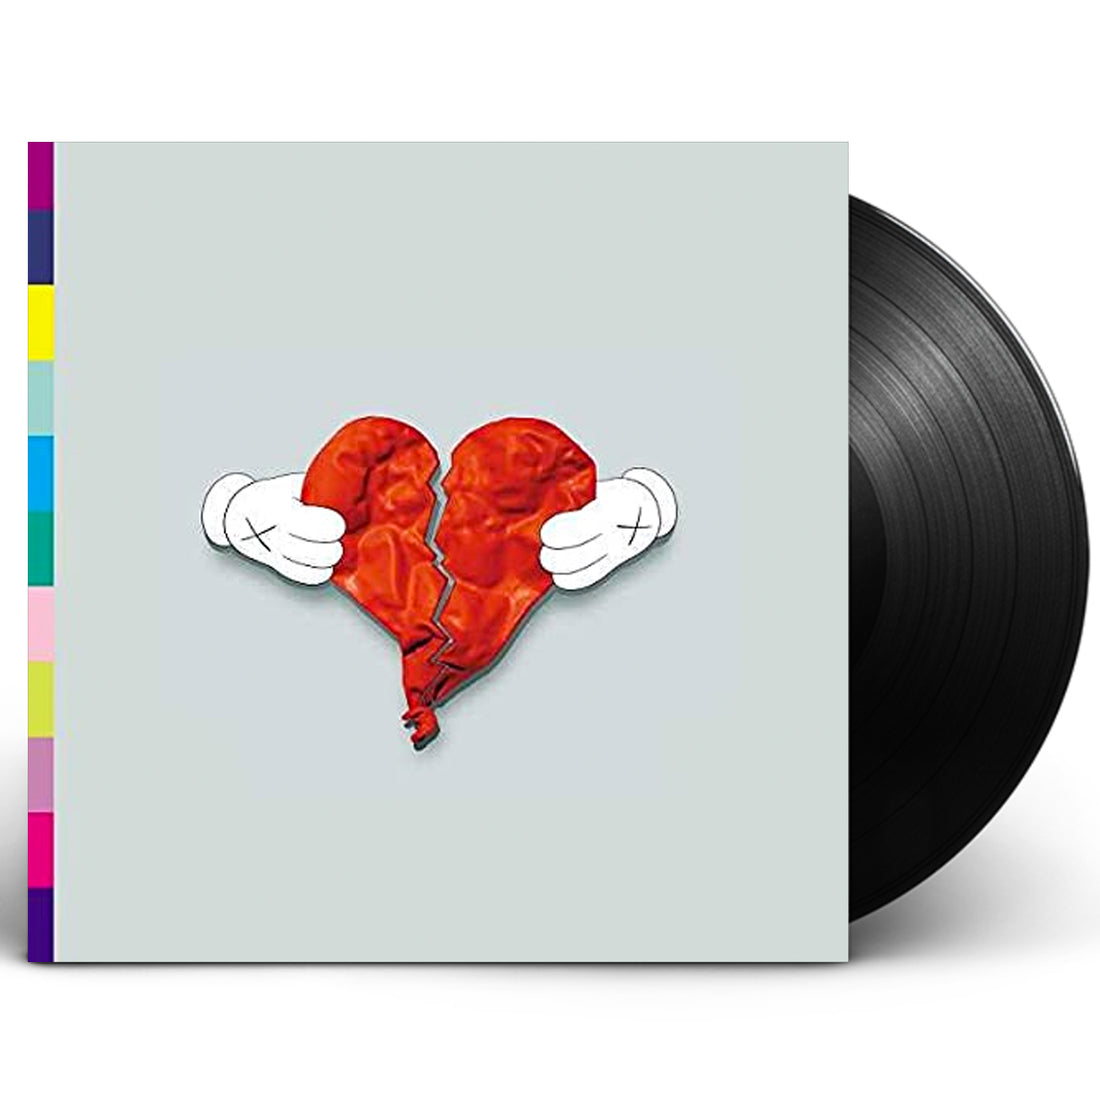 Kanye West "808s & Heartbreak" 2xLP Vinyl 